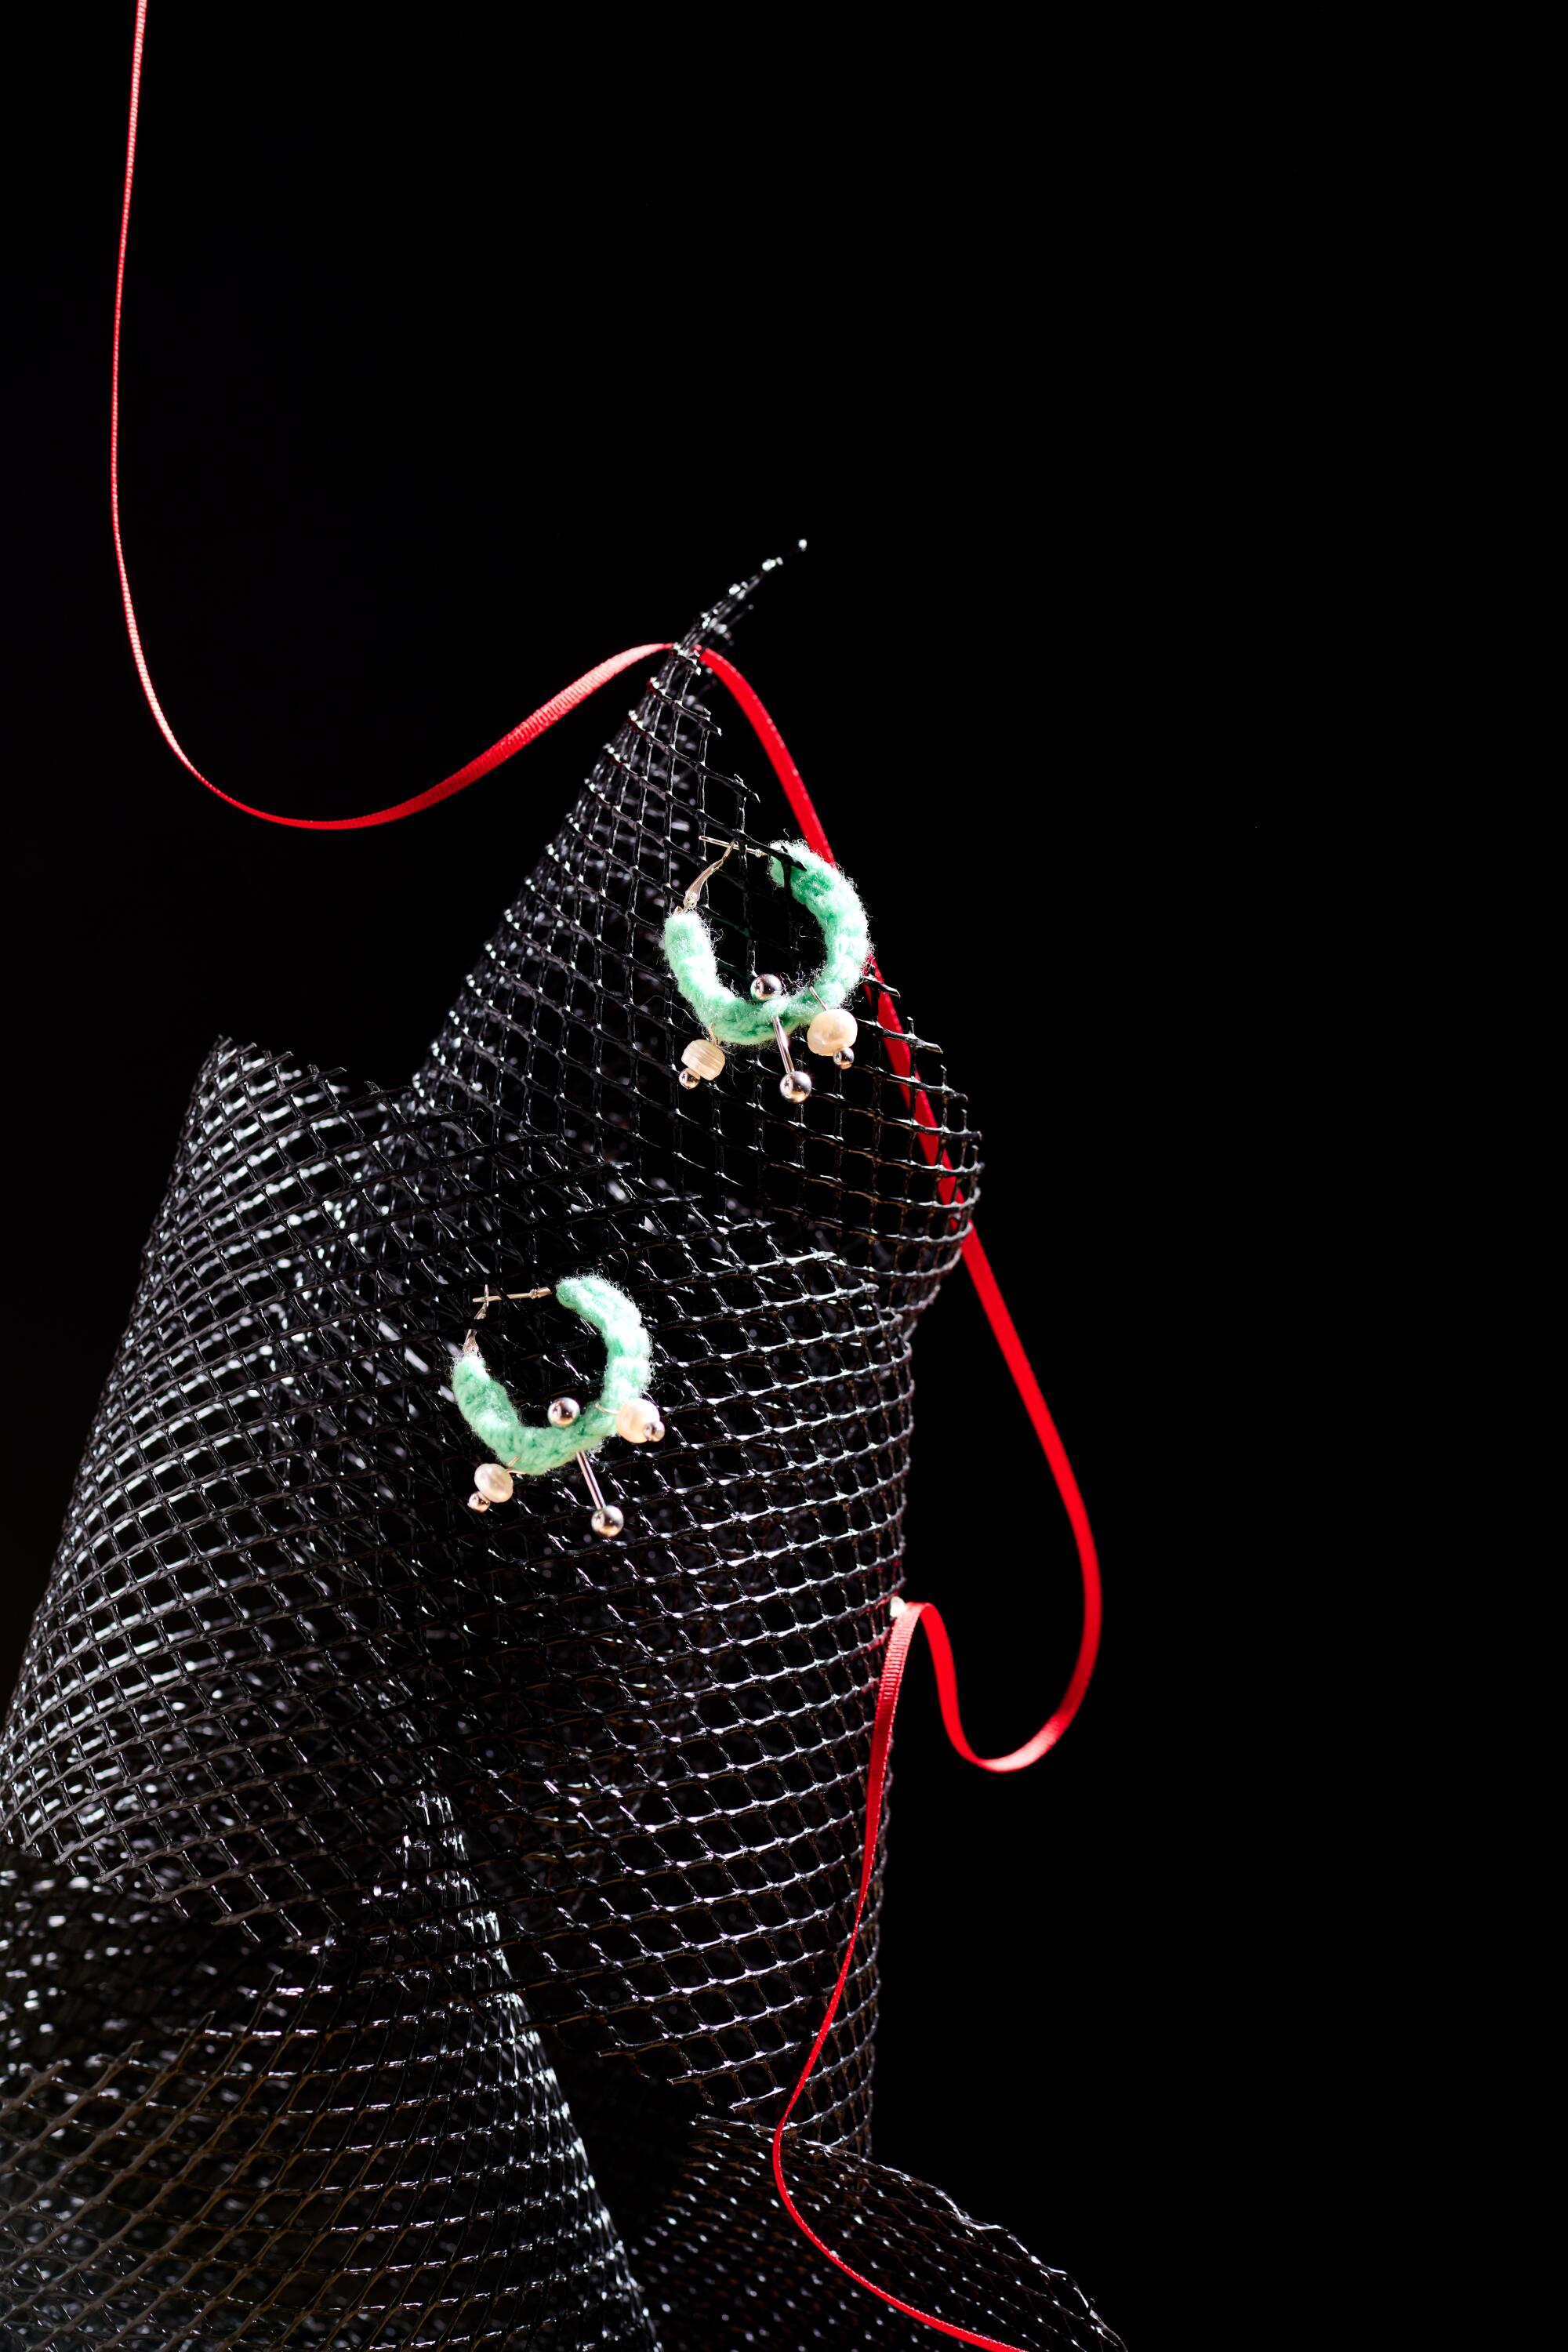 Green hoop earrings on black material near a red plastic string.